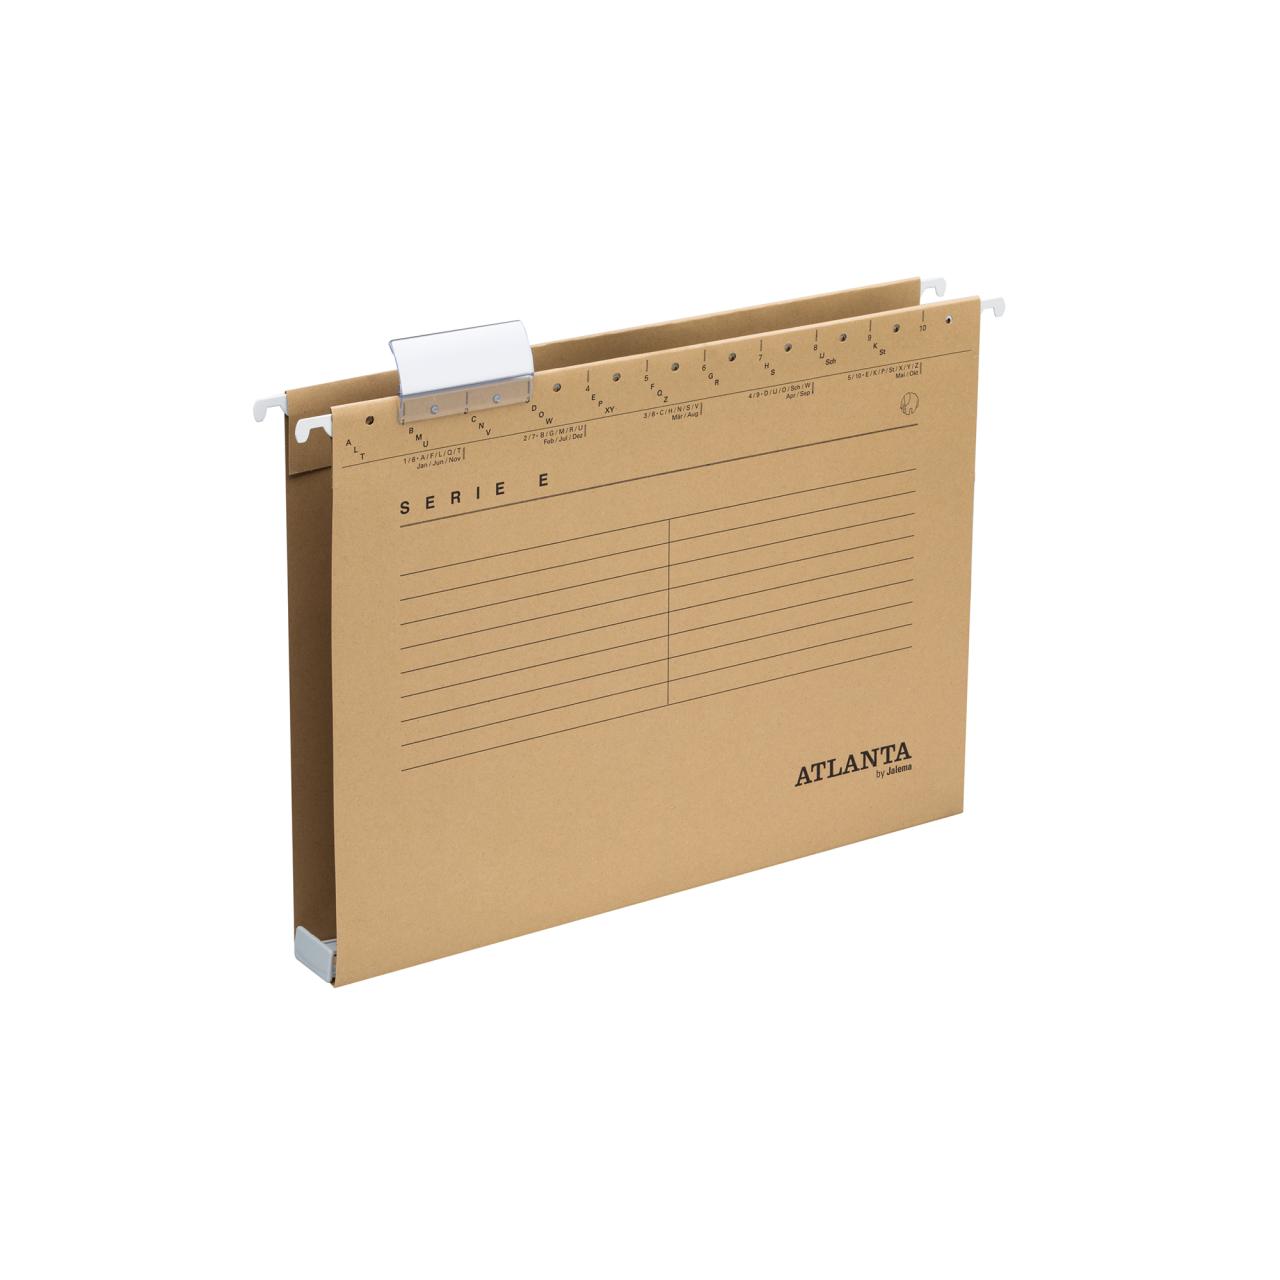 Serie-E Suspension File, 30 mm, A4, 100% recycled cardboard, FSC®